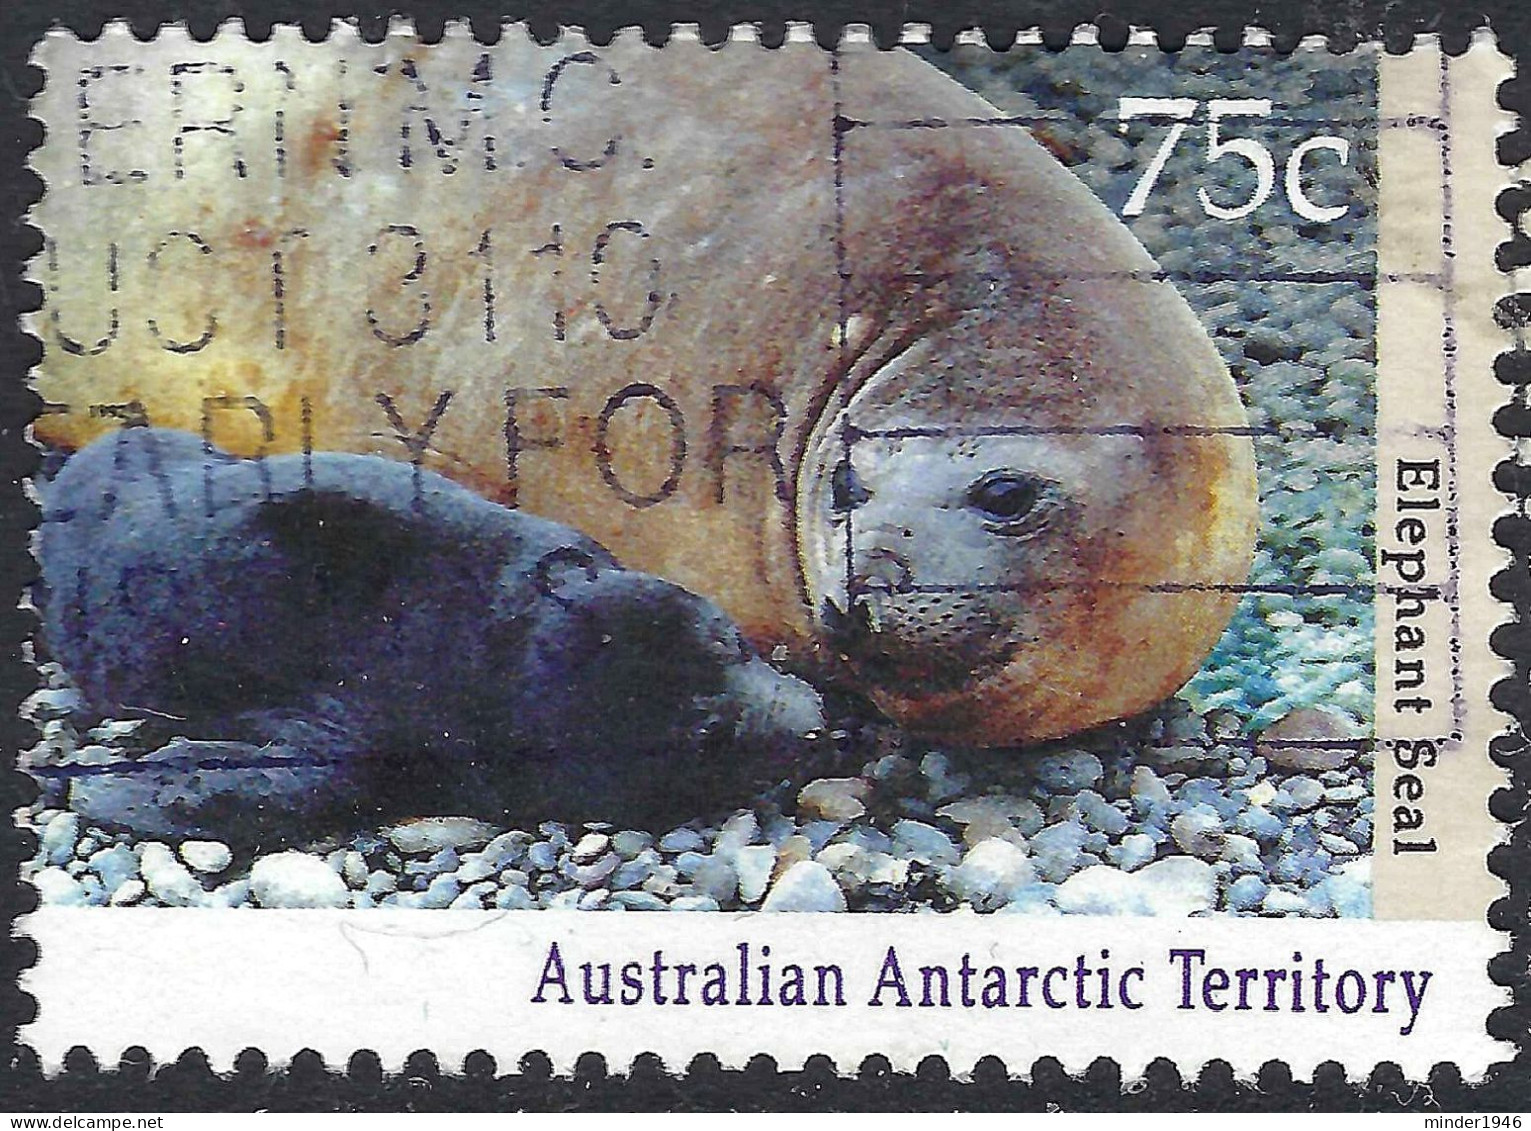 AUSTRALIAN ANTARCTIC TERRITORY (AAT) 1992 QEII 75c Multicoloured, Wildlife-Elephant Seal SG91 FU - Oblitérés